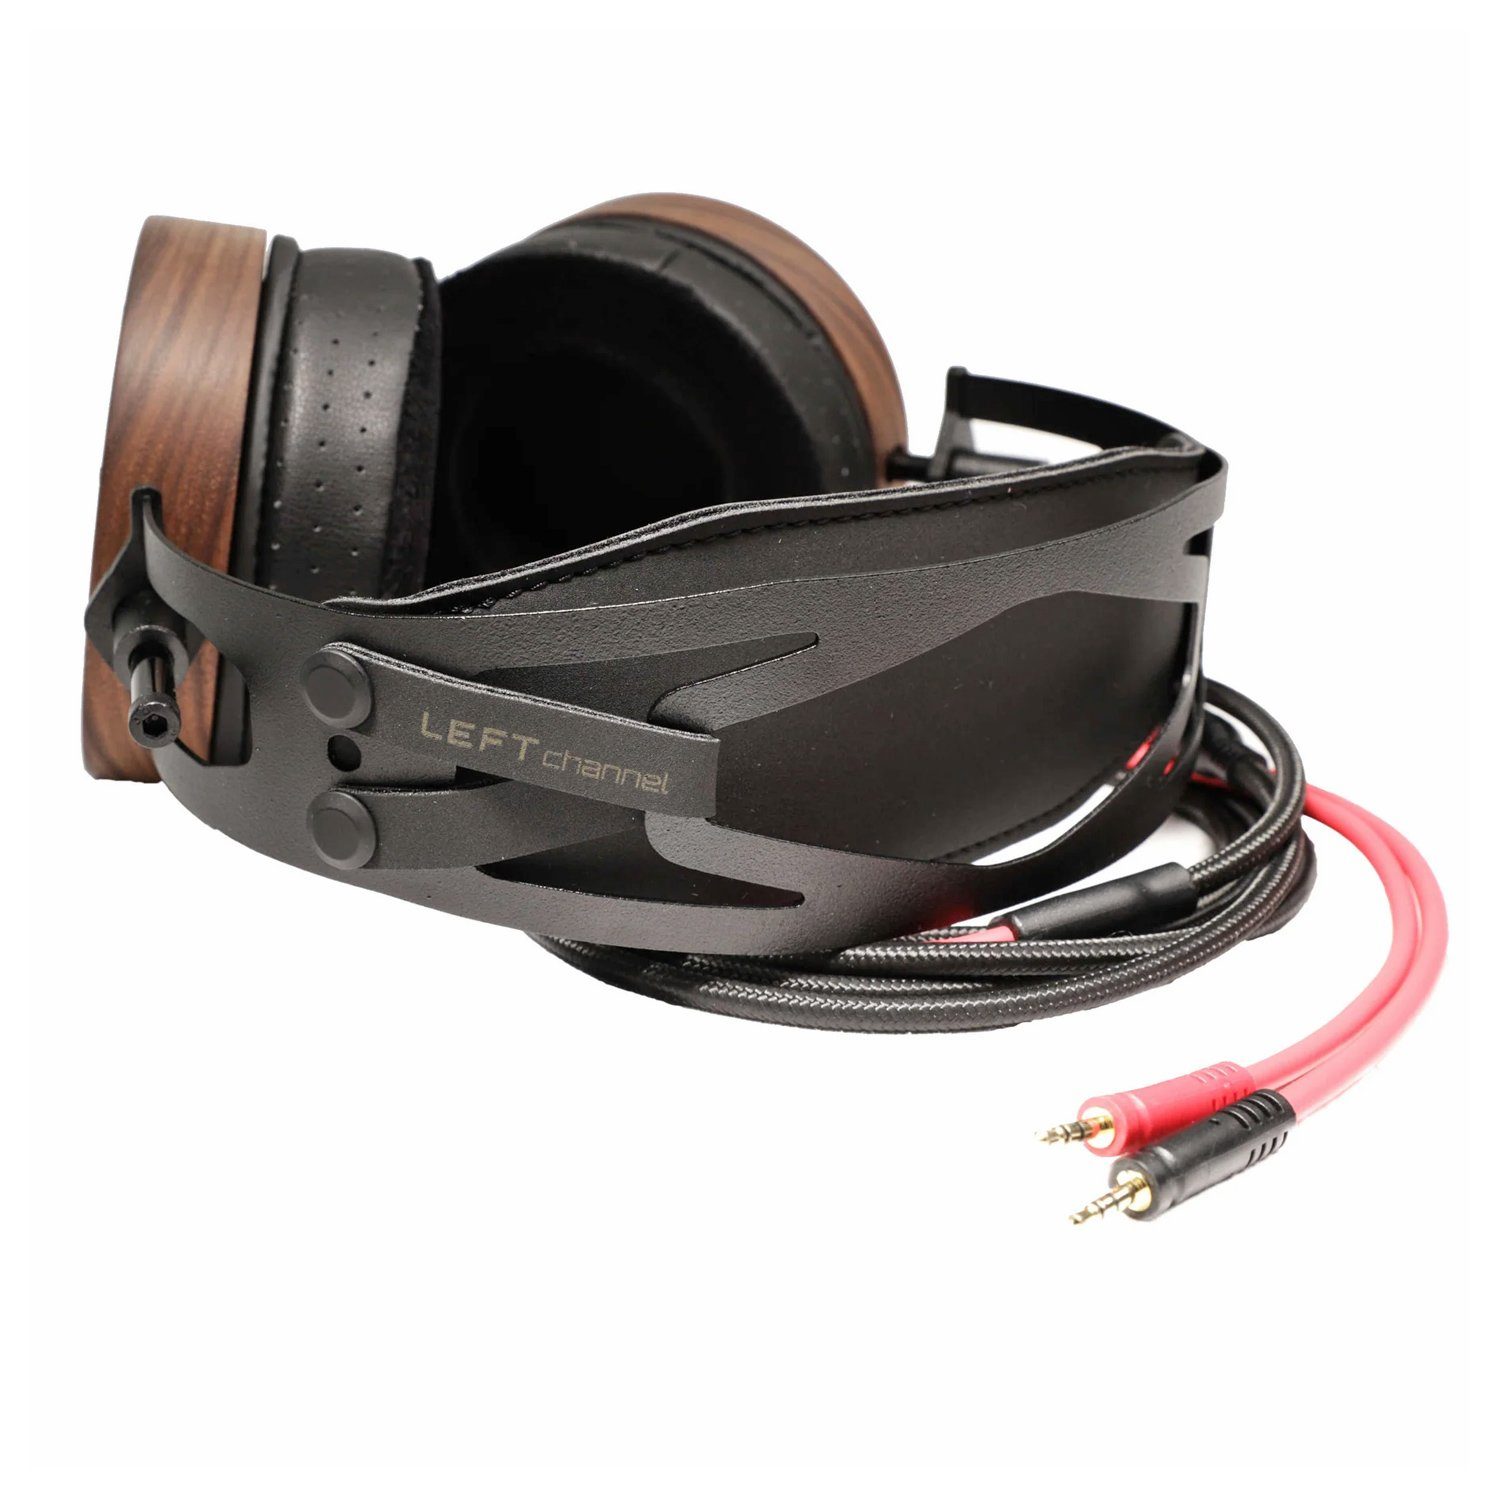 S5X Mixing/Mastering offener Musik, Musik) von Over-Ear-Kopfhörer für binauraler Mixing/Mastering OLLO Studio-Kopfhörer binauraler Audio von (für